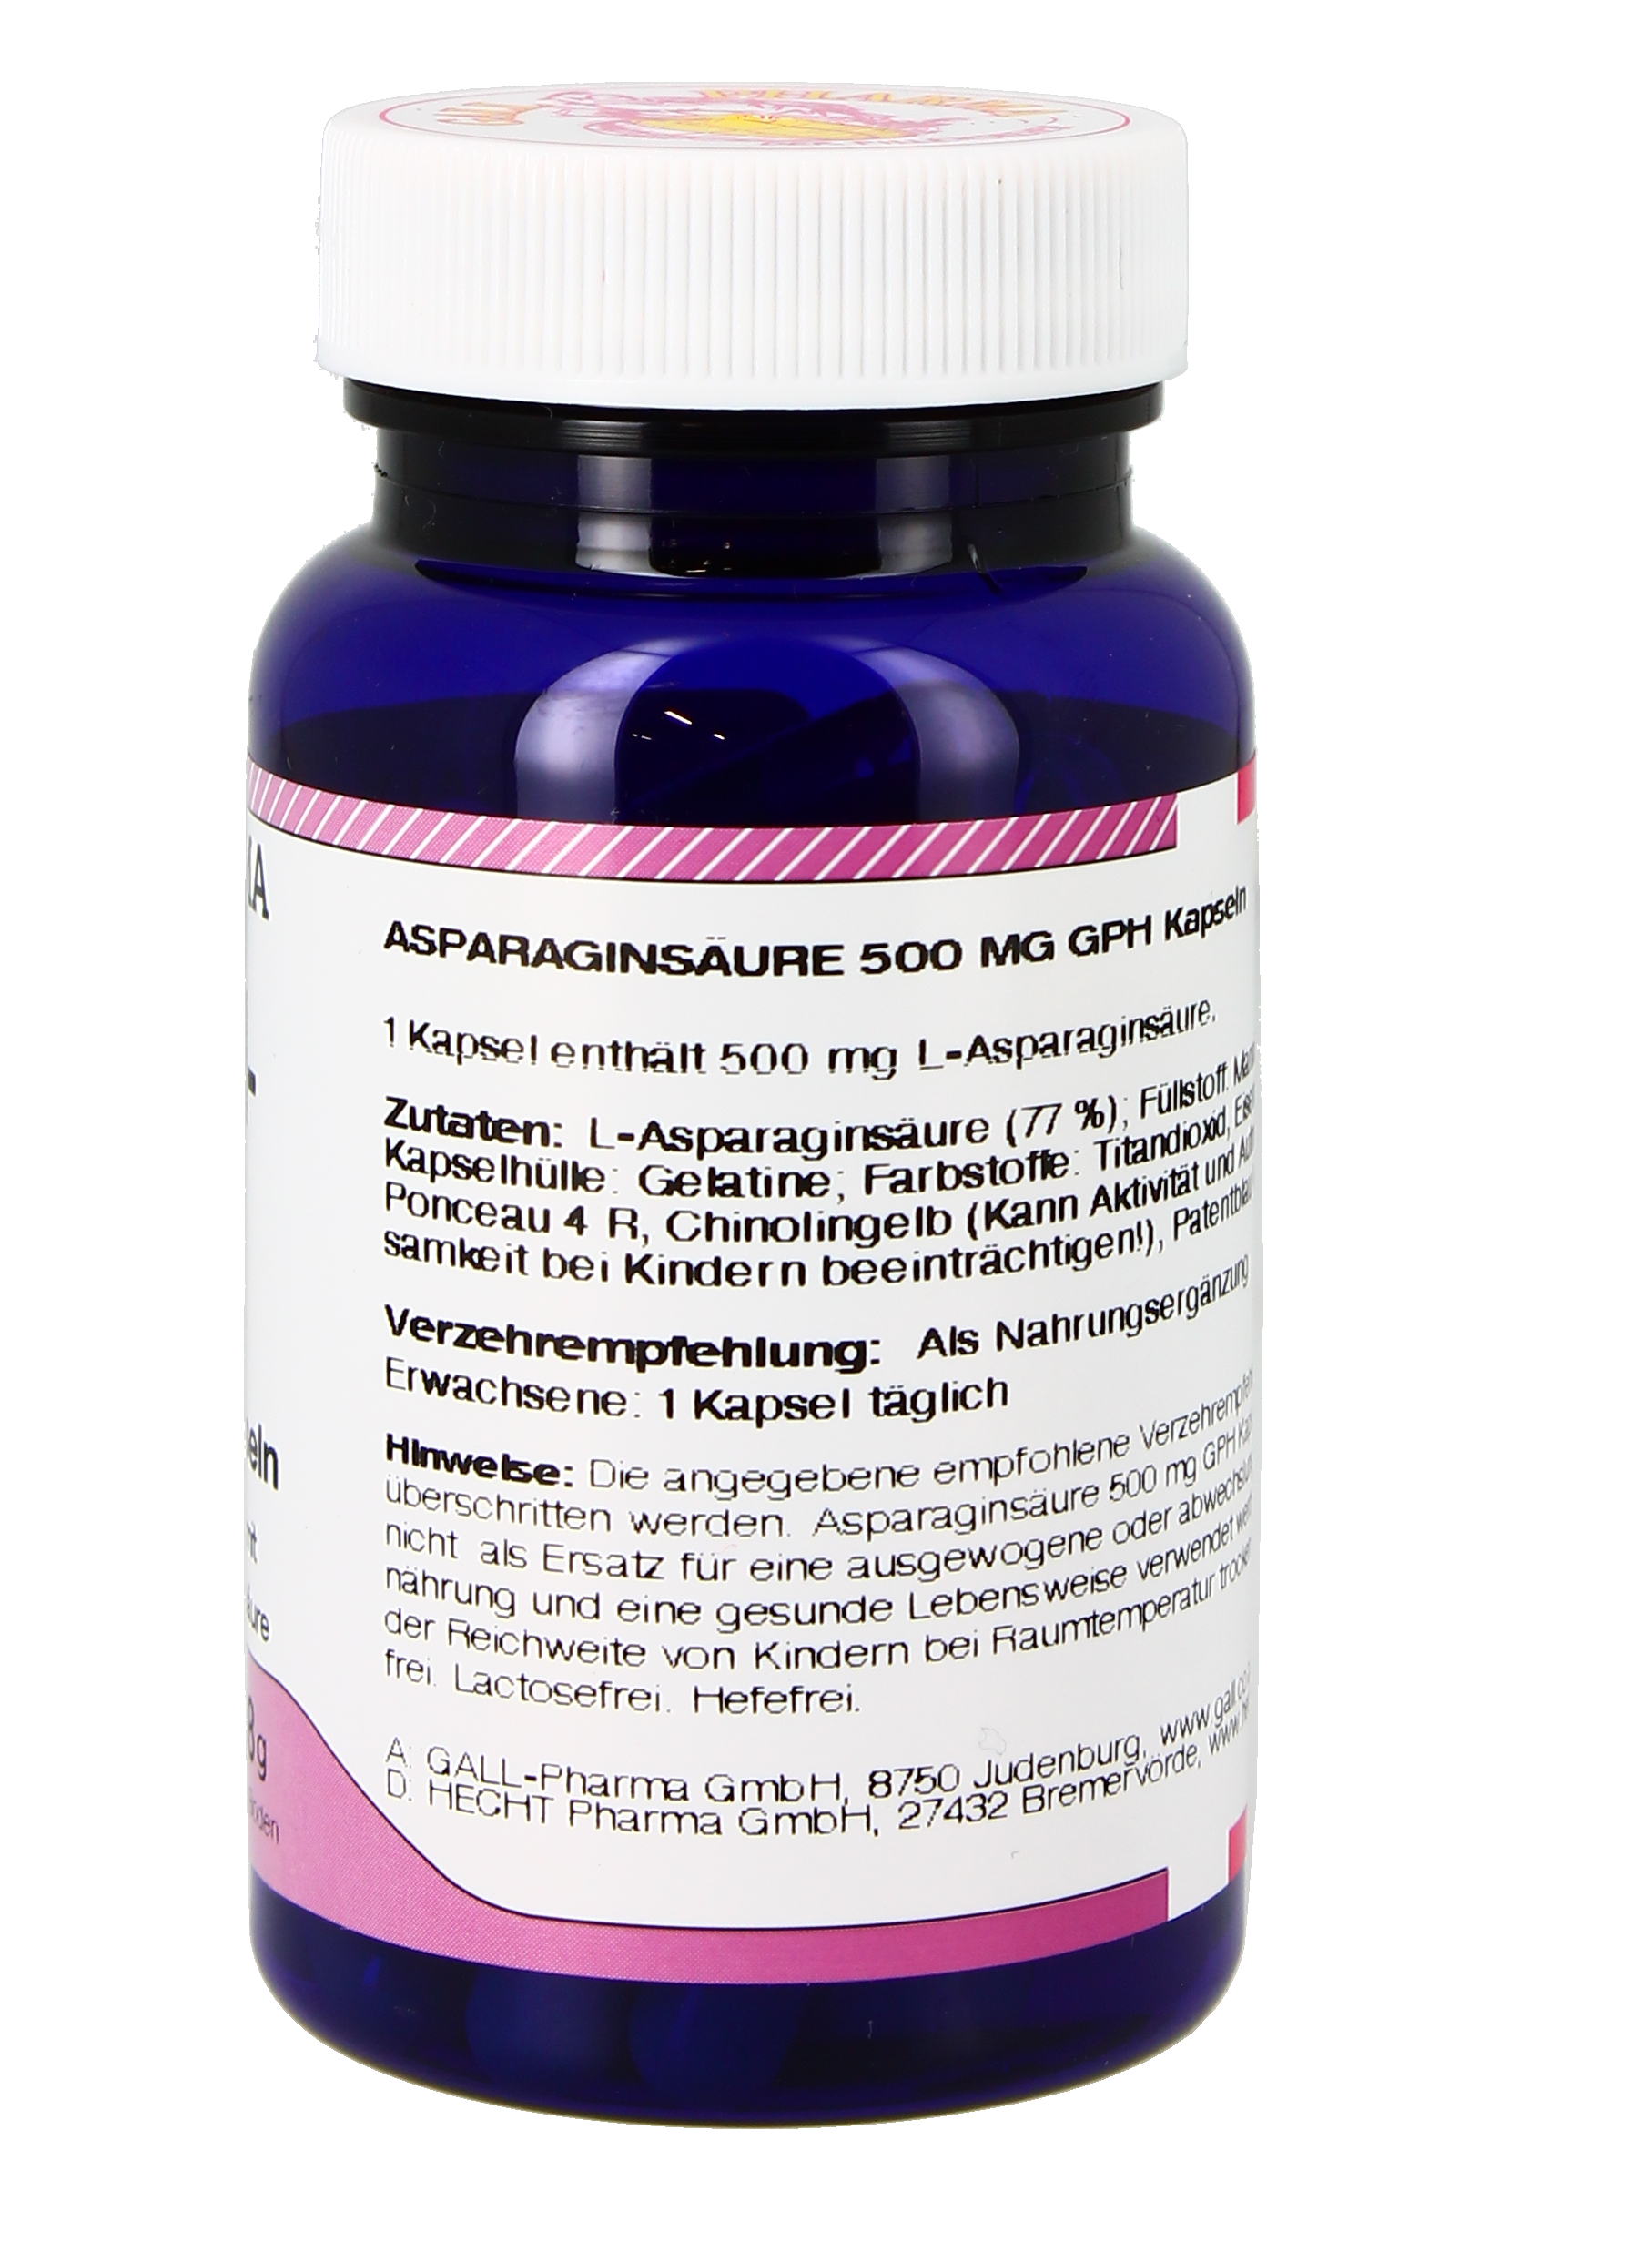 Asparaginsäure 500 mg GPH Kapseln